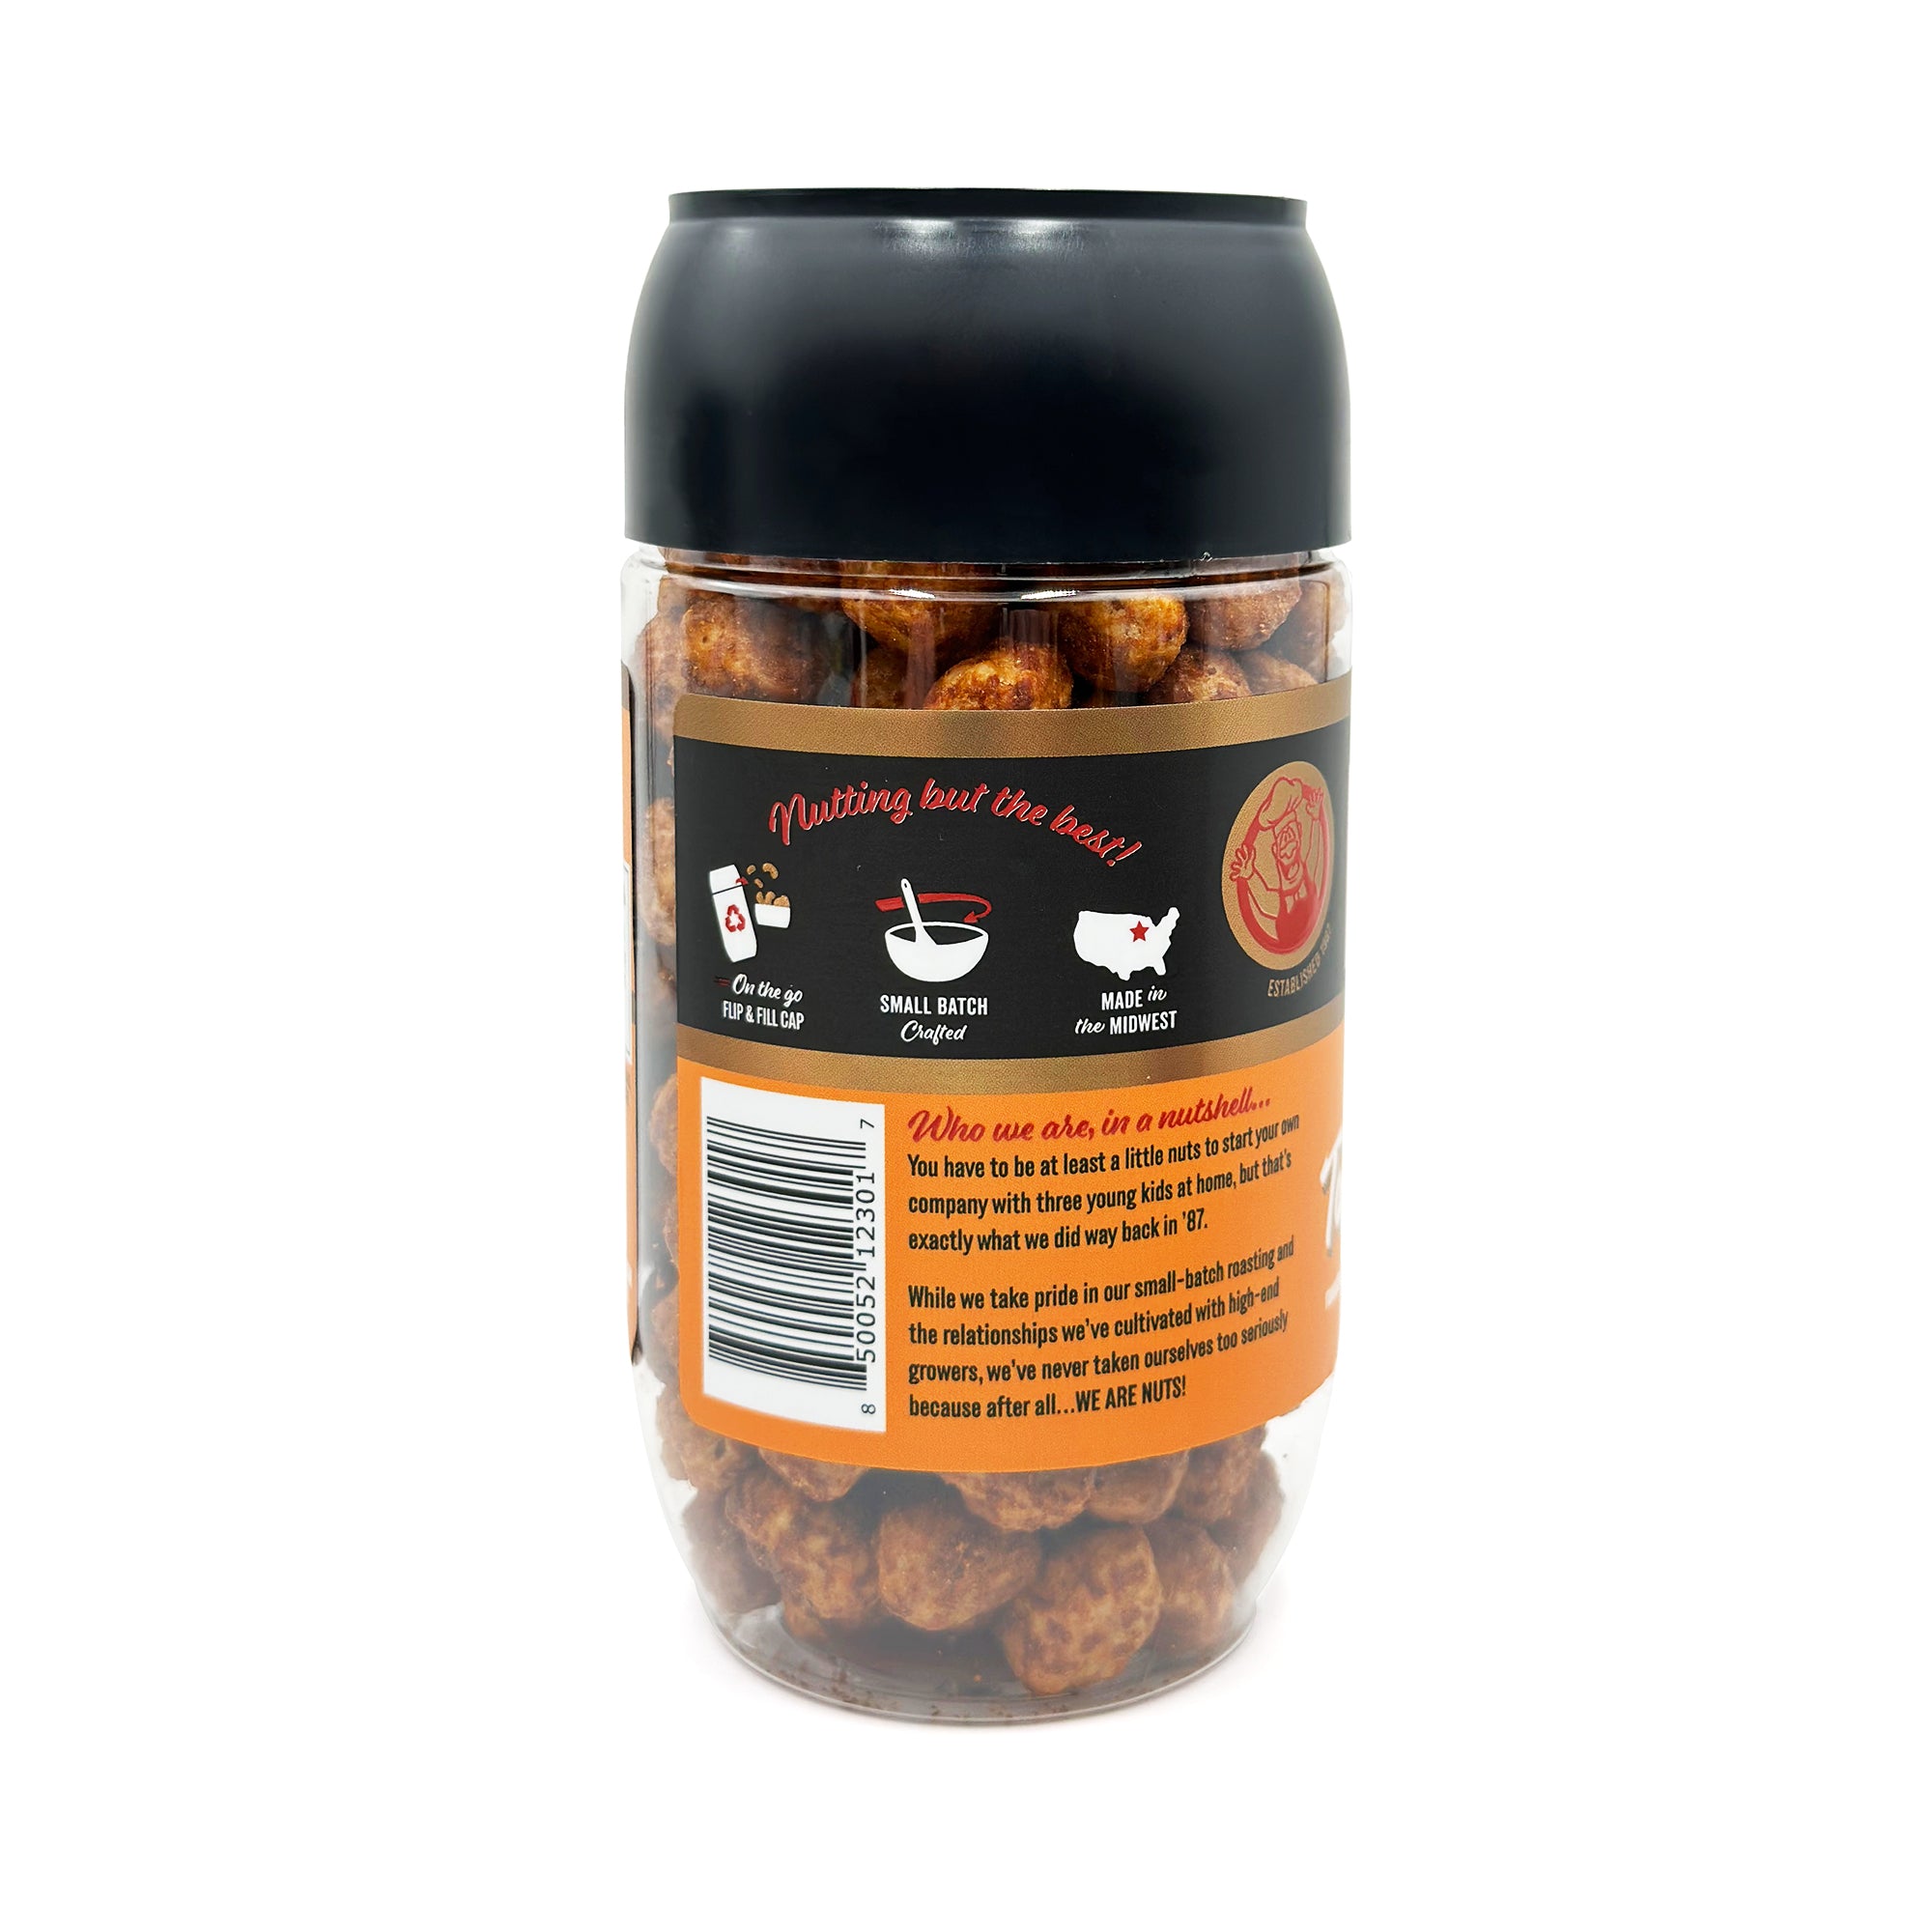 Hot Nuts Toffee Peanuts